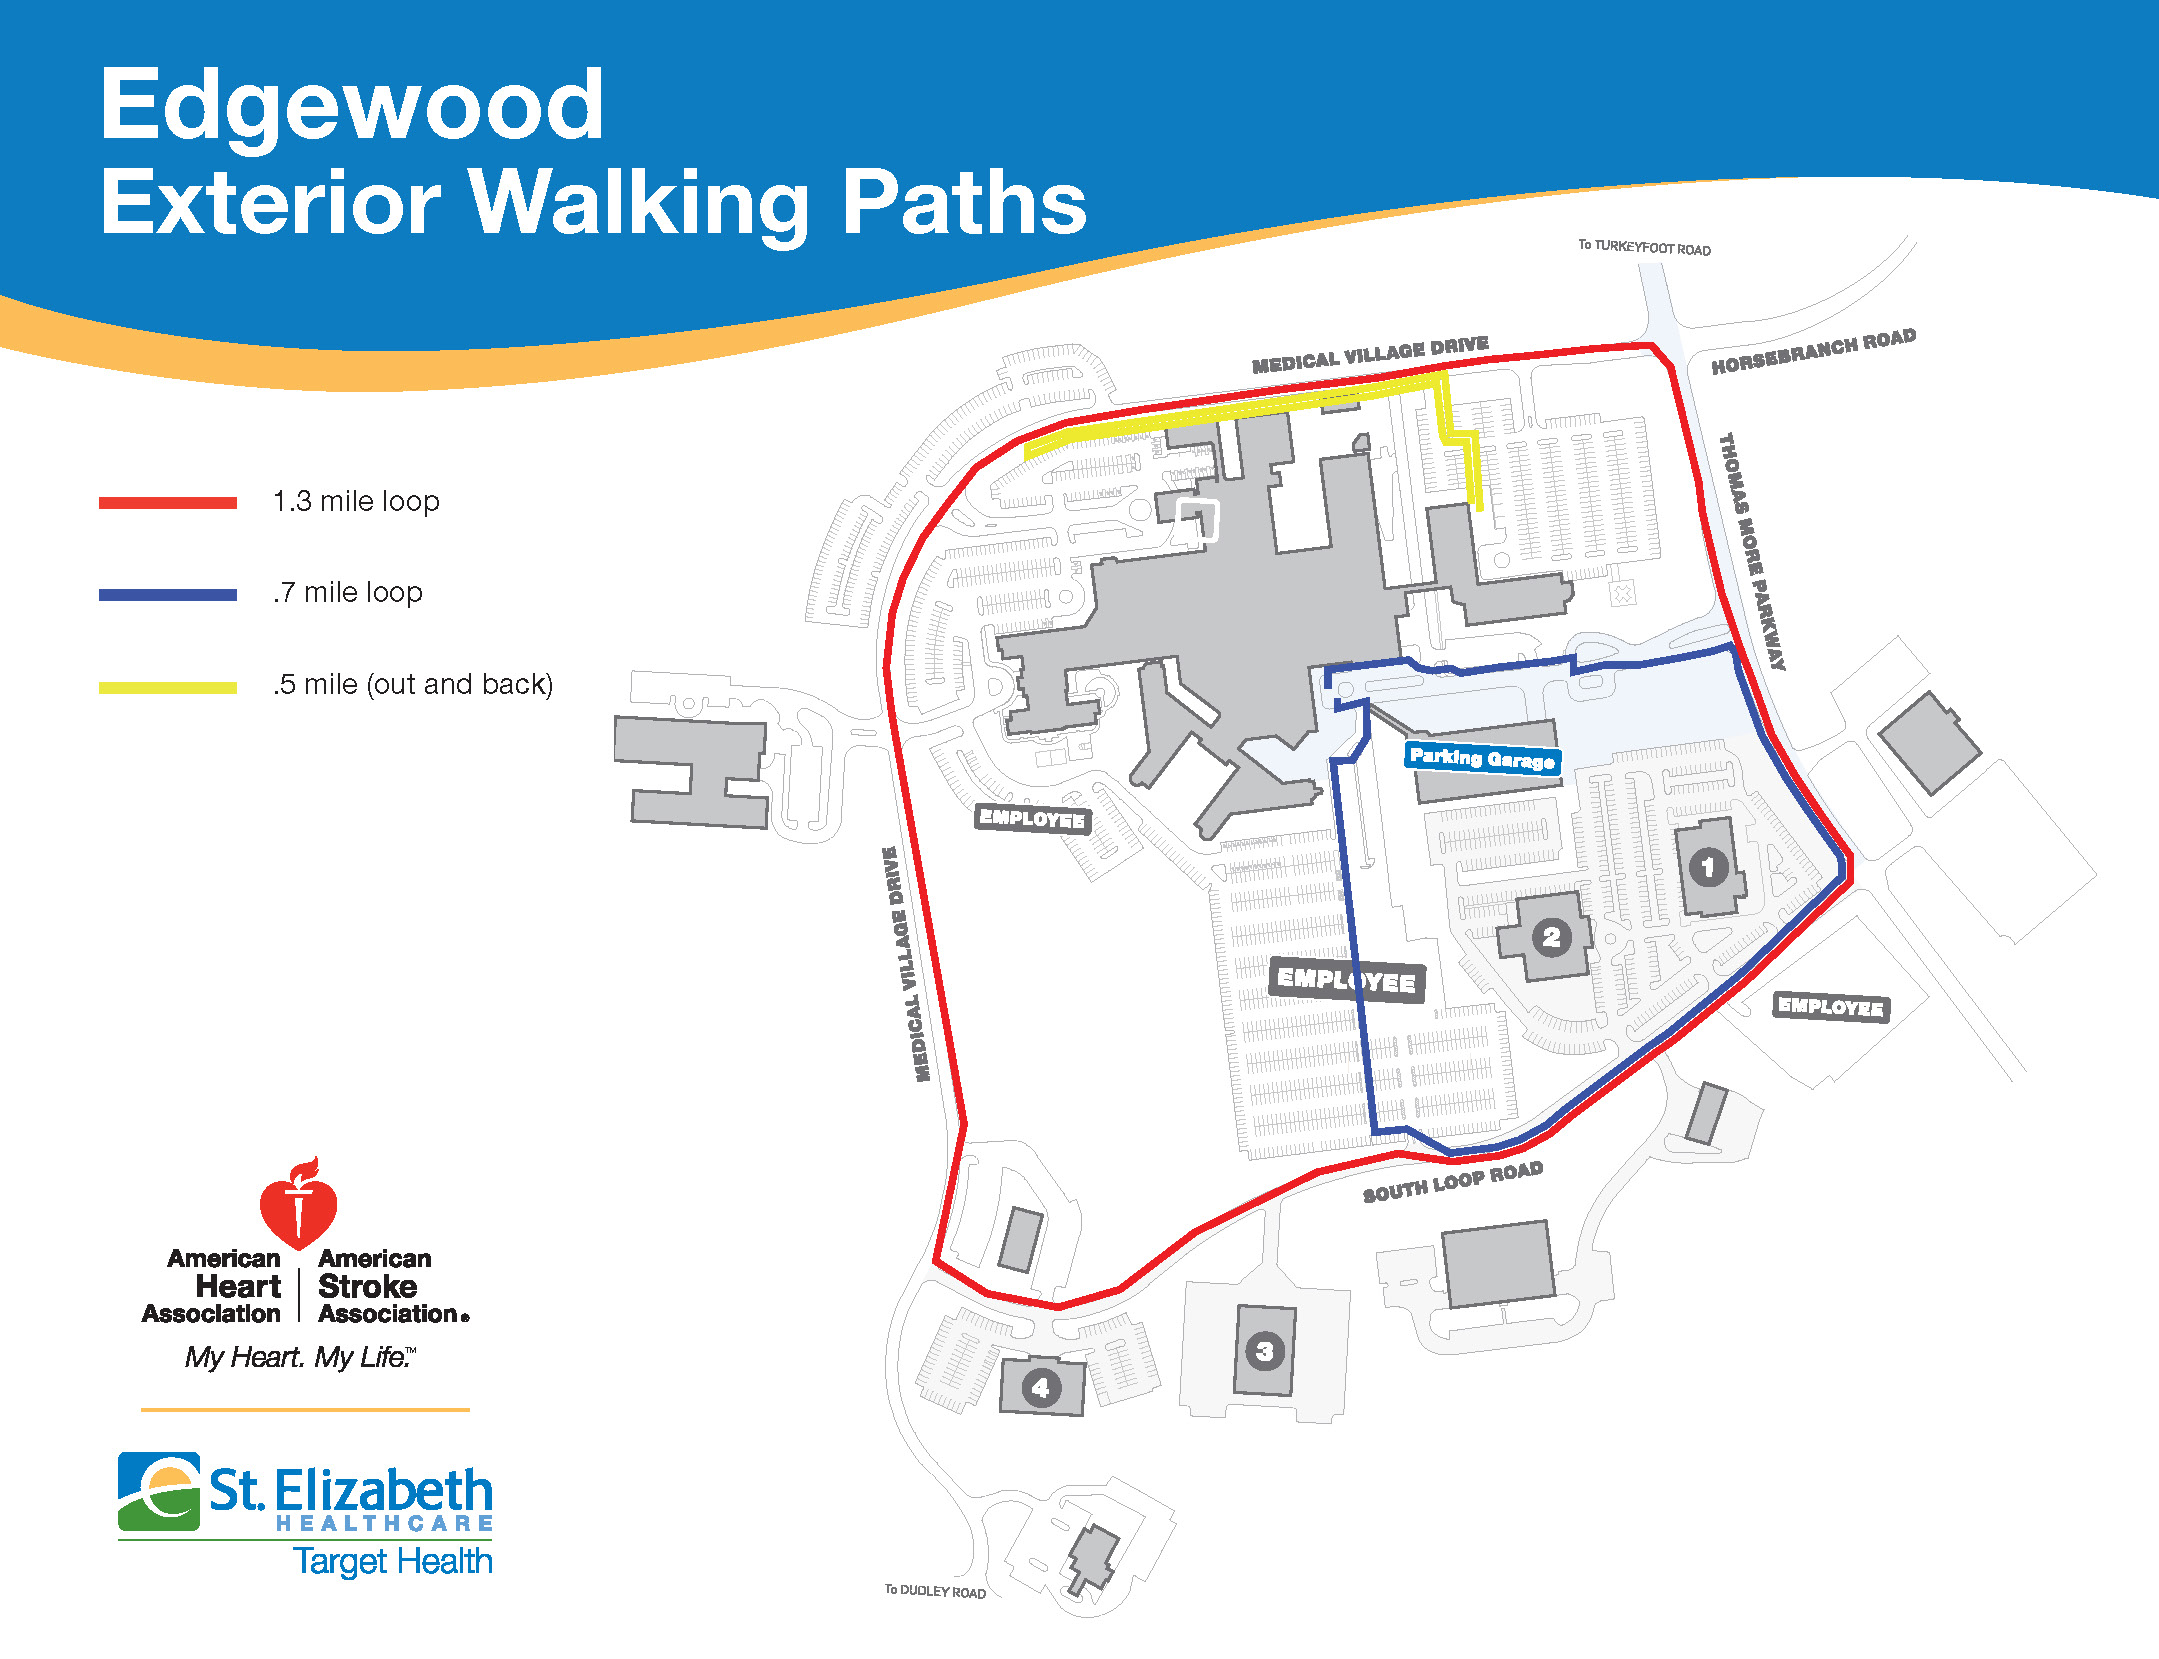 Edgwood Exterior Walking Paths